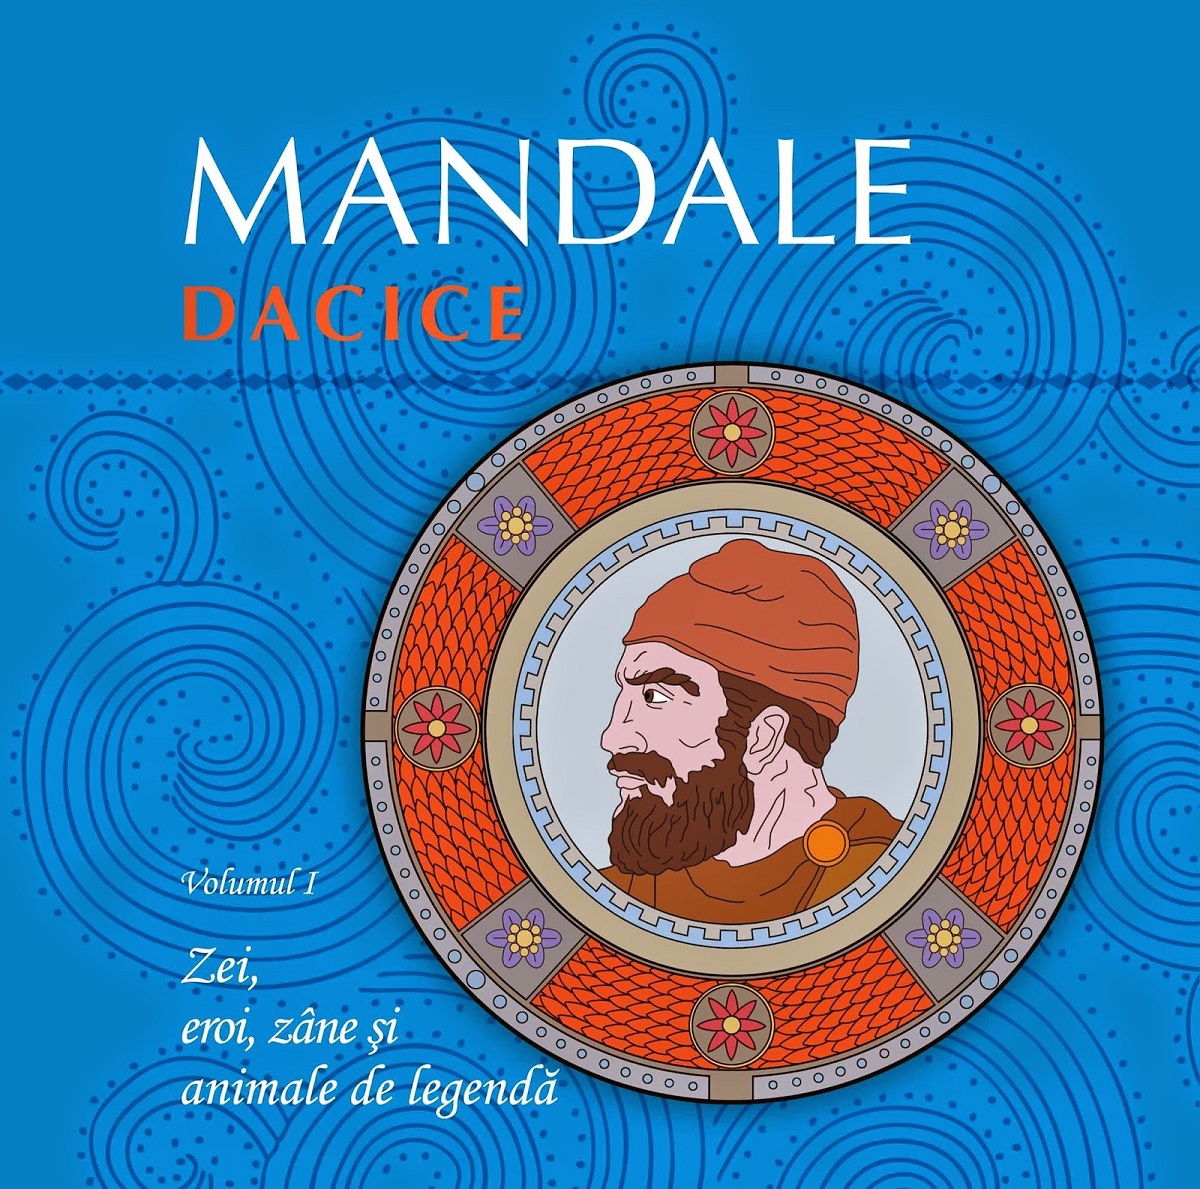 Mandale dacice vol.1: Zei, eroi, zane si animale de legenda